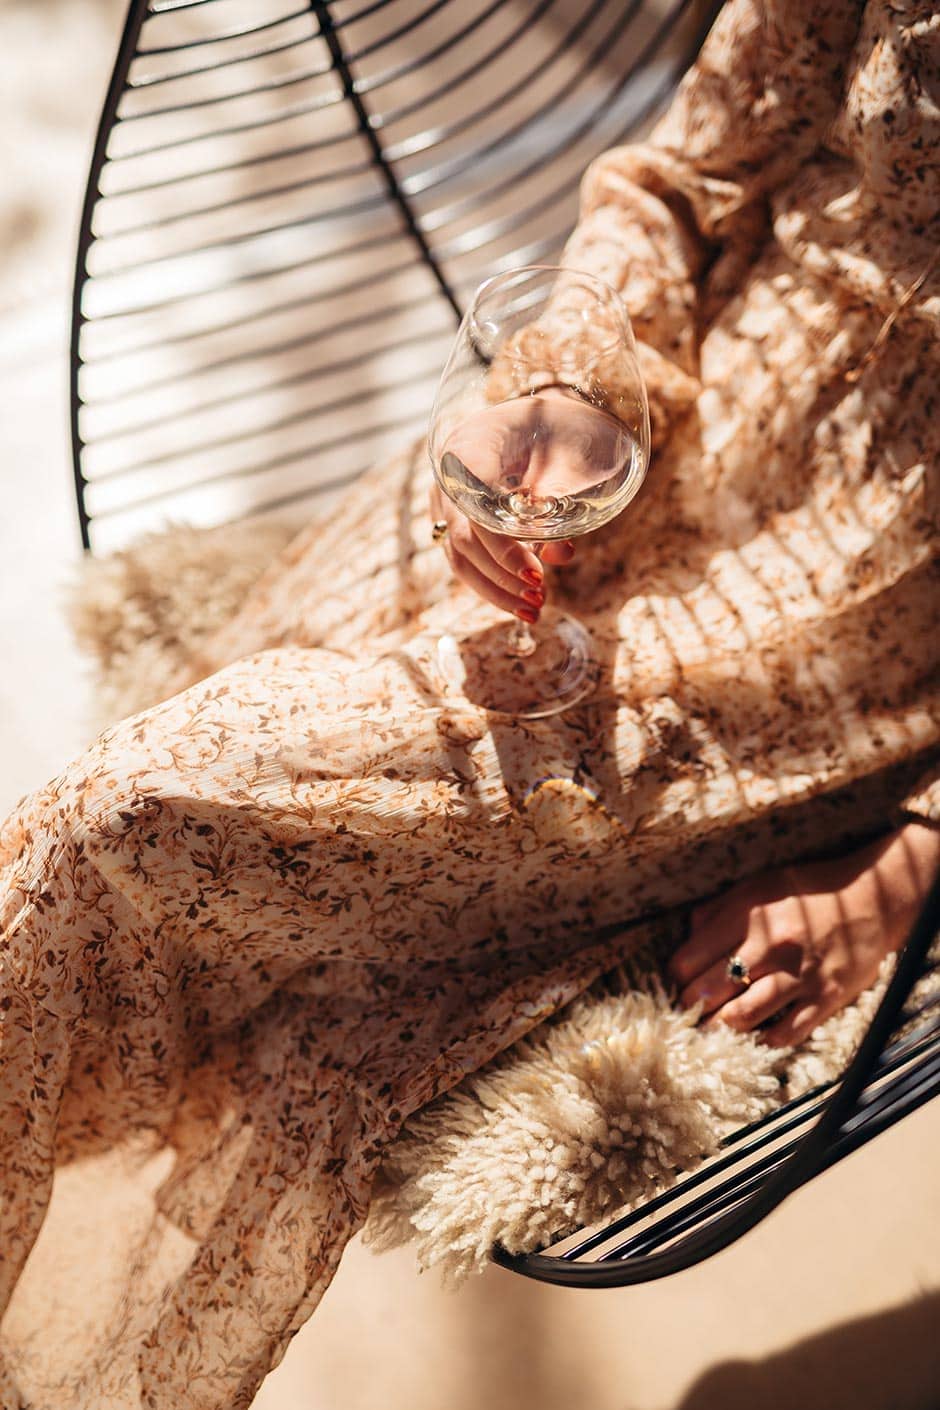 Summer entertaining sip tip: Cloudy Bay’s latest sauvignon blanc